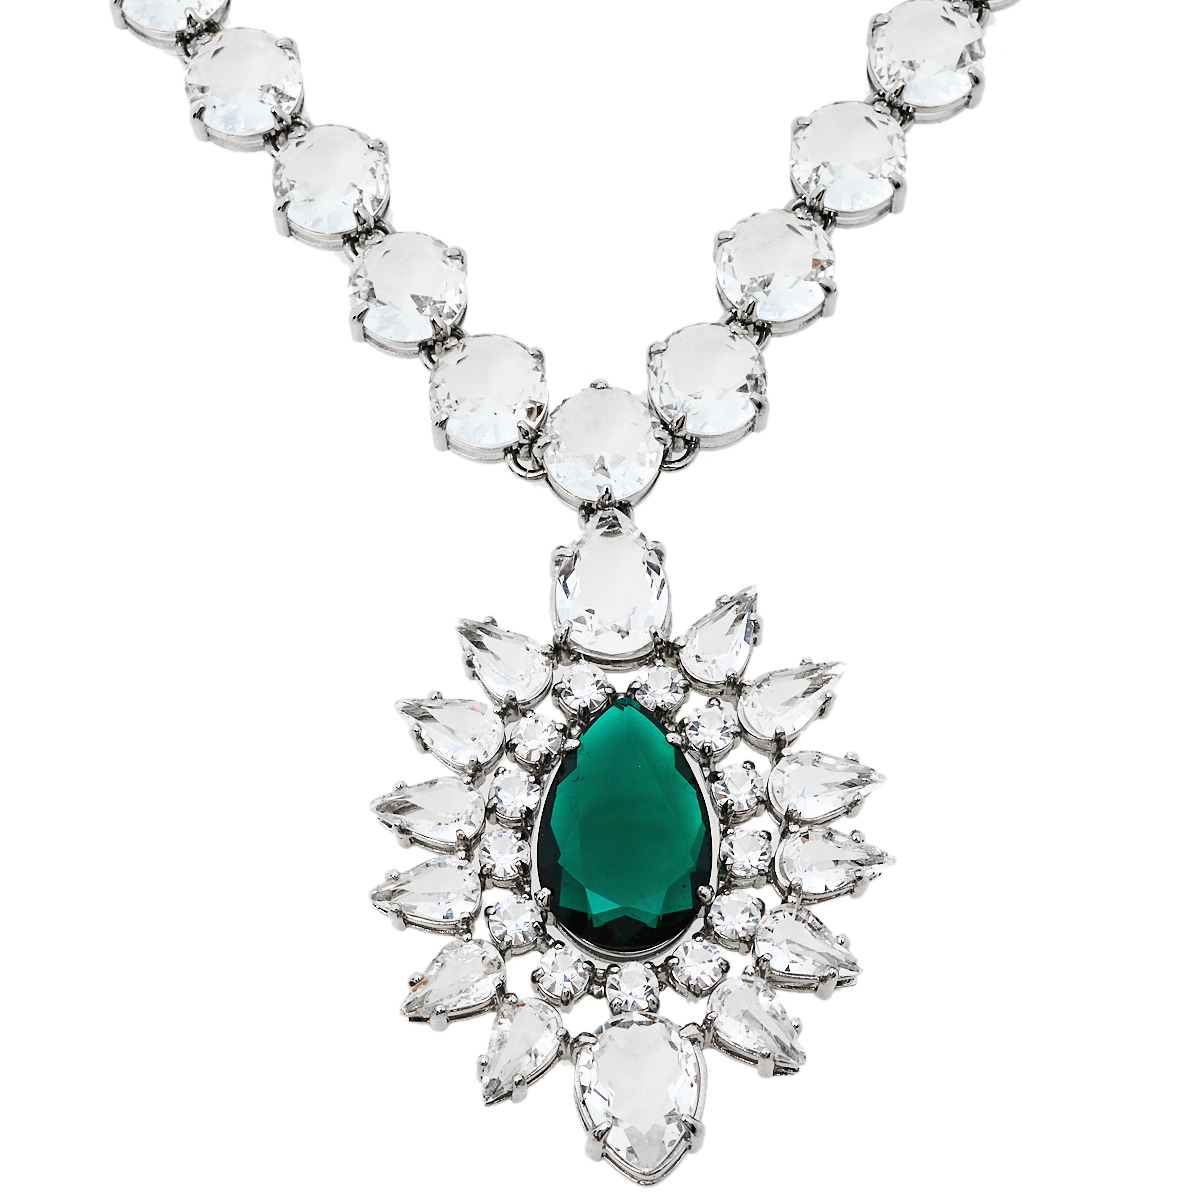 

Prada Silver Tone Crystal Embellished Statement Necklace